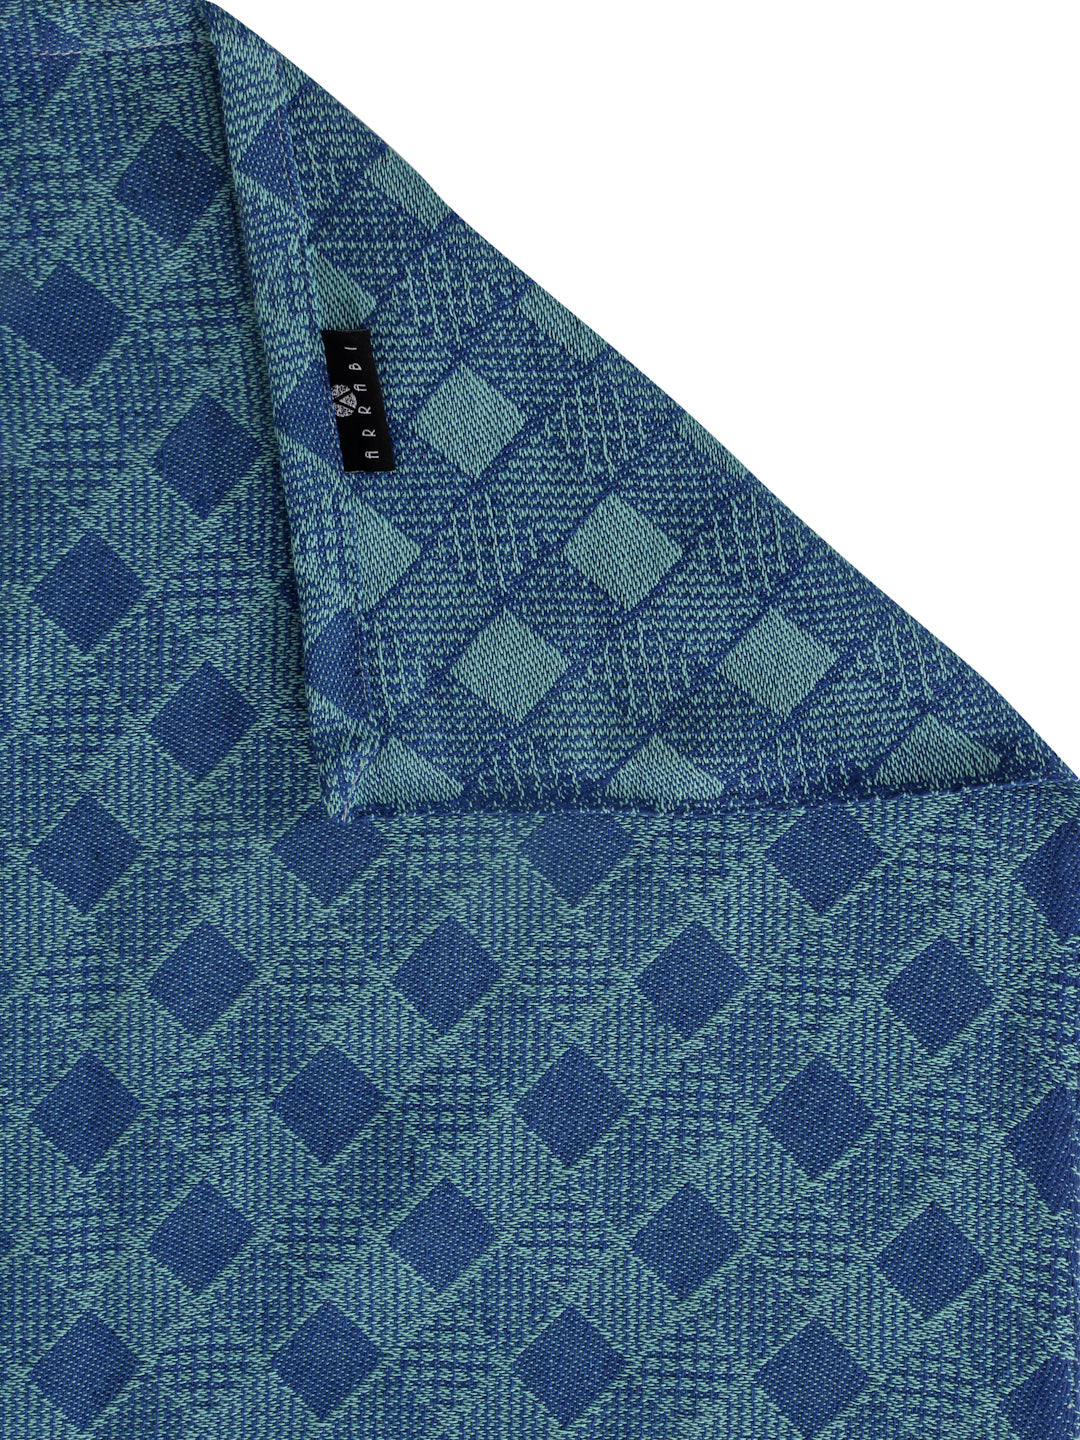 Arrabi Blue Striped 100% Handwoven Cotton 8 SEATER Table Cover (220 x 150 cm)